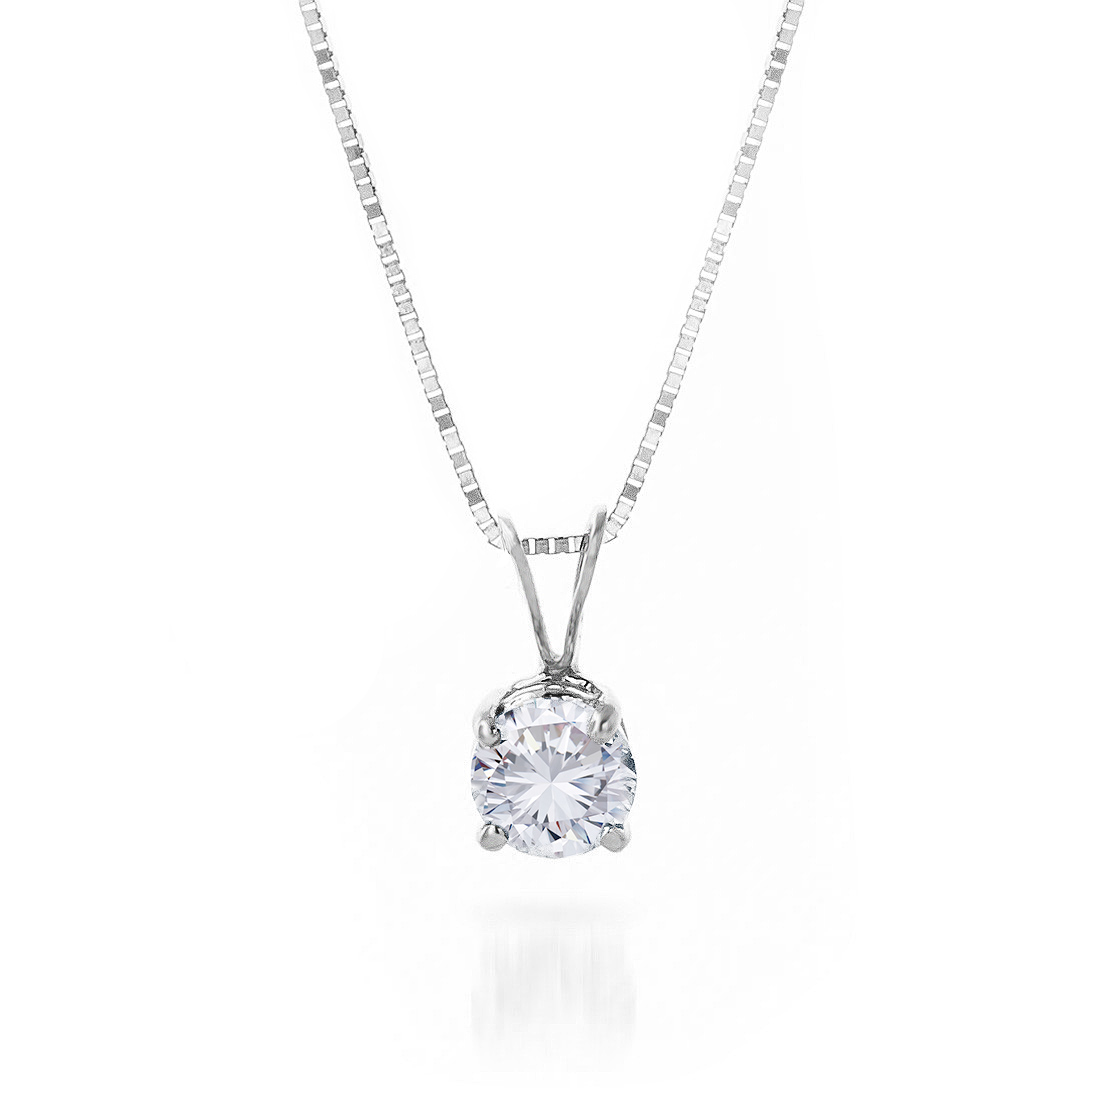 Round Cut Diamond Pendant Necklace 0.5 ct in 9ct White Gold